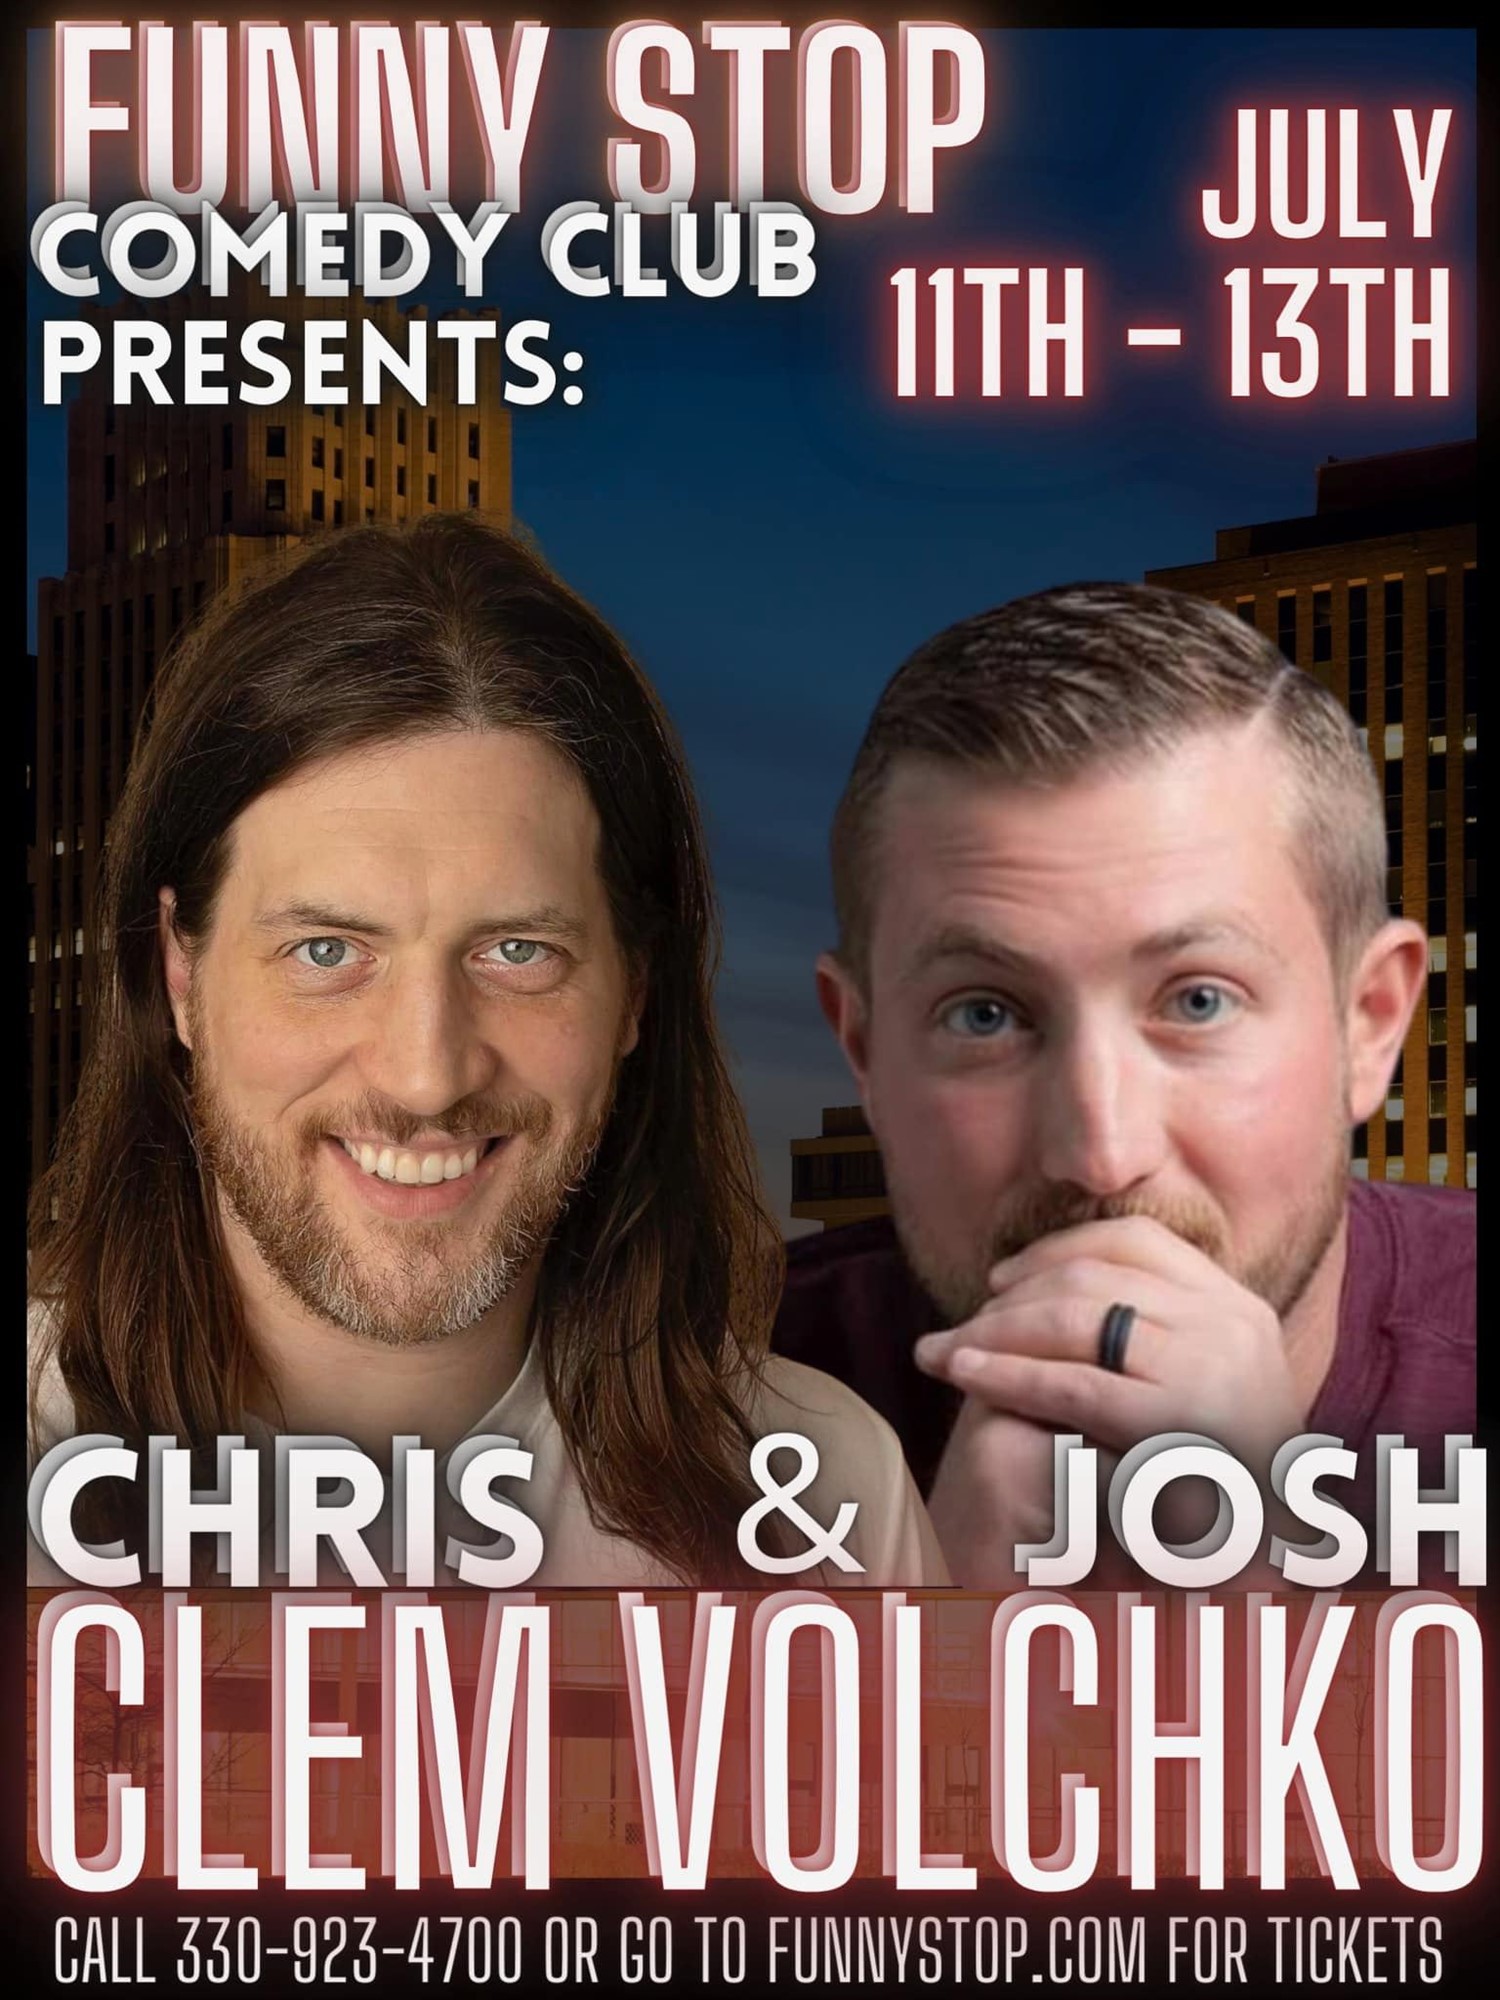 Chris Clem & Josh Volchko - Thur. 8:00PM Show Funny Stop Comedy Club on jul. 11, 20:00@Funny Stop Comedy Club - Compra entradas y obtén información enFunny Stop funnystop.online